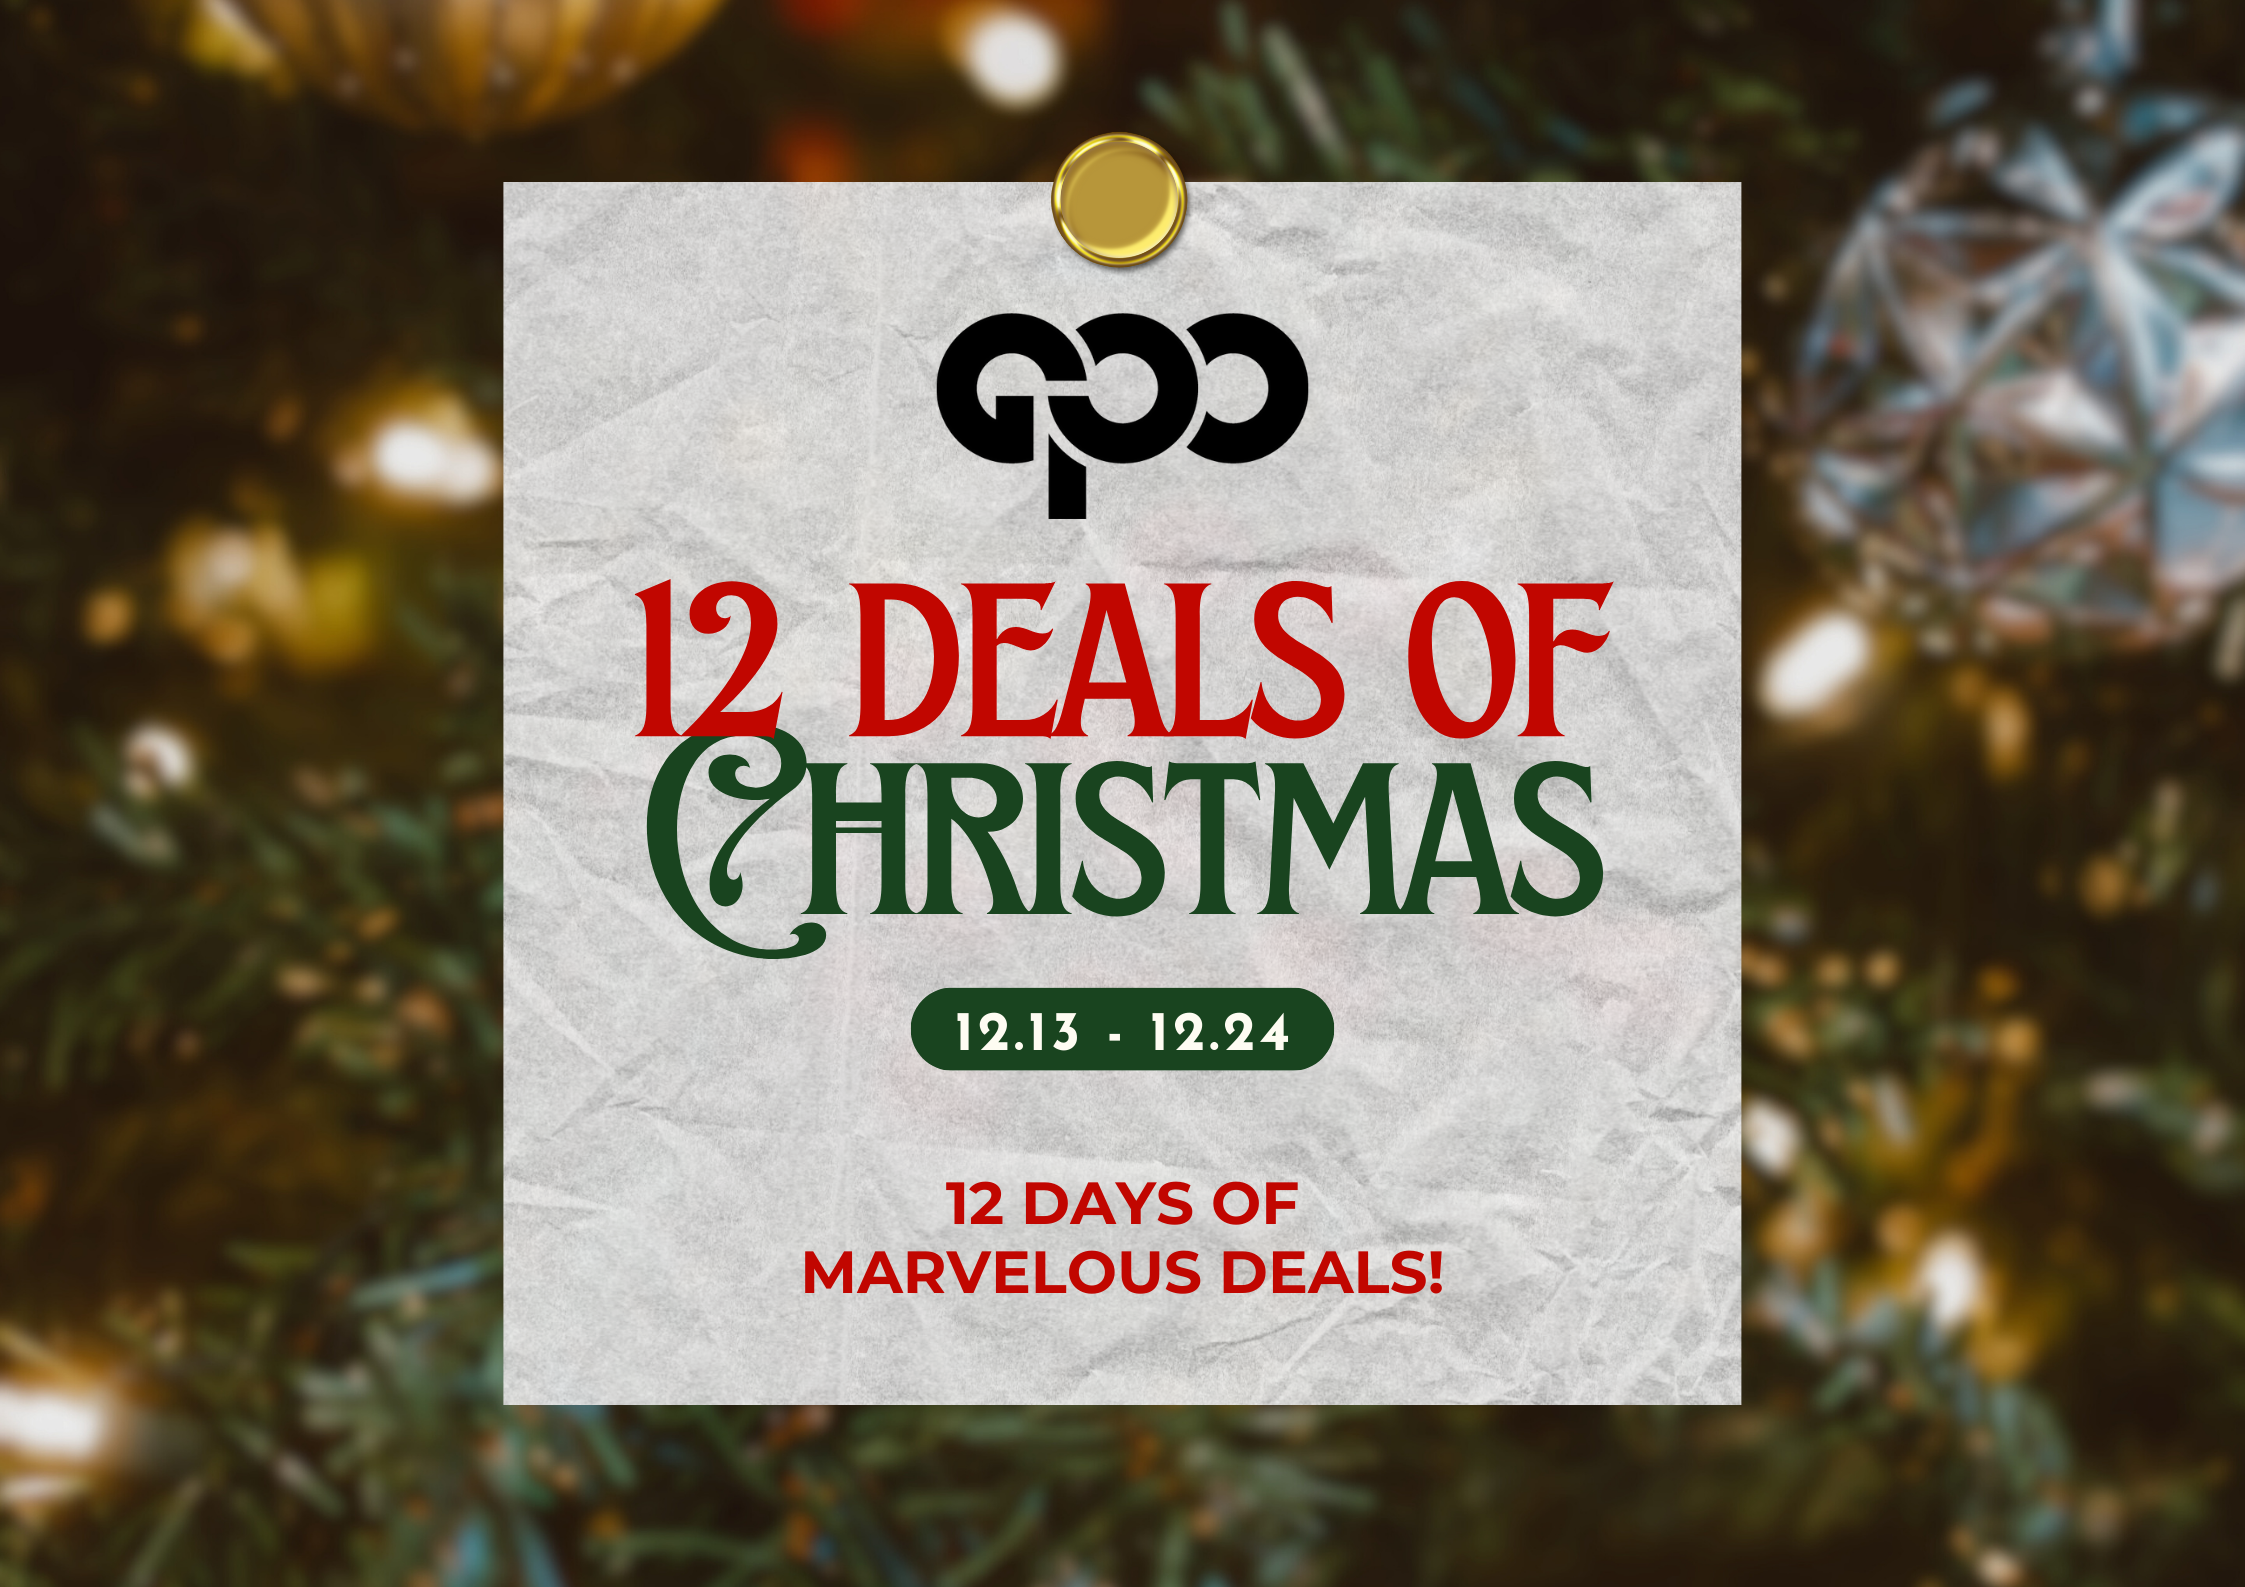 12 Deals of Christmas (December 14): Twinkles